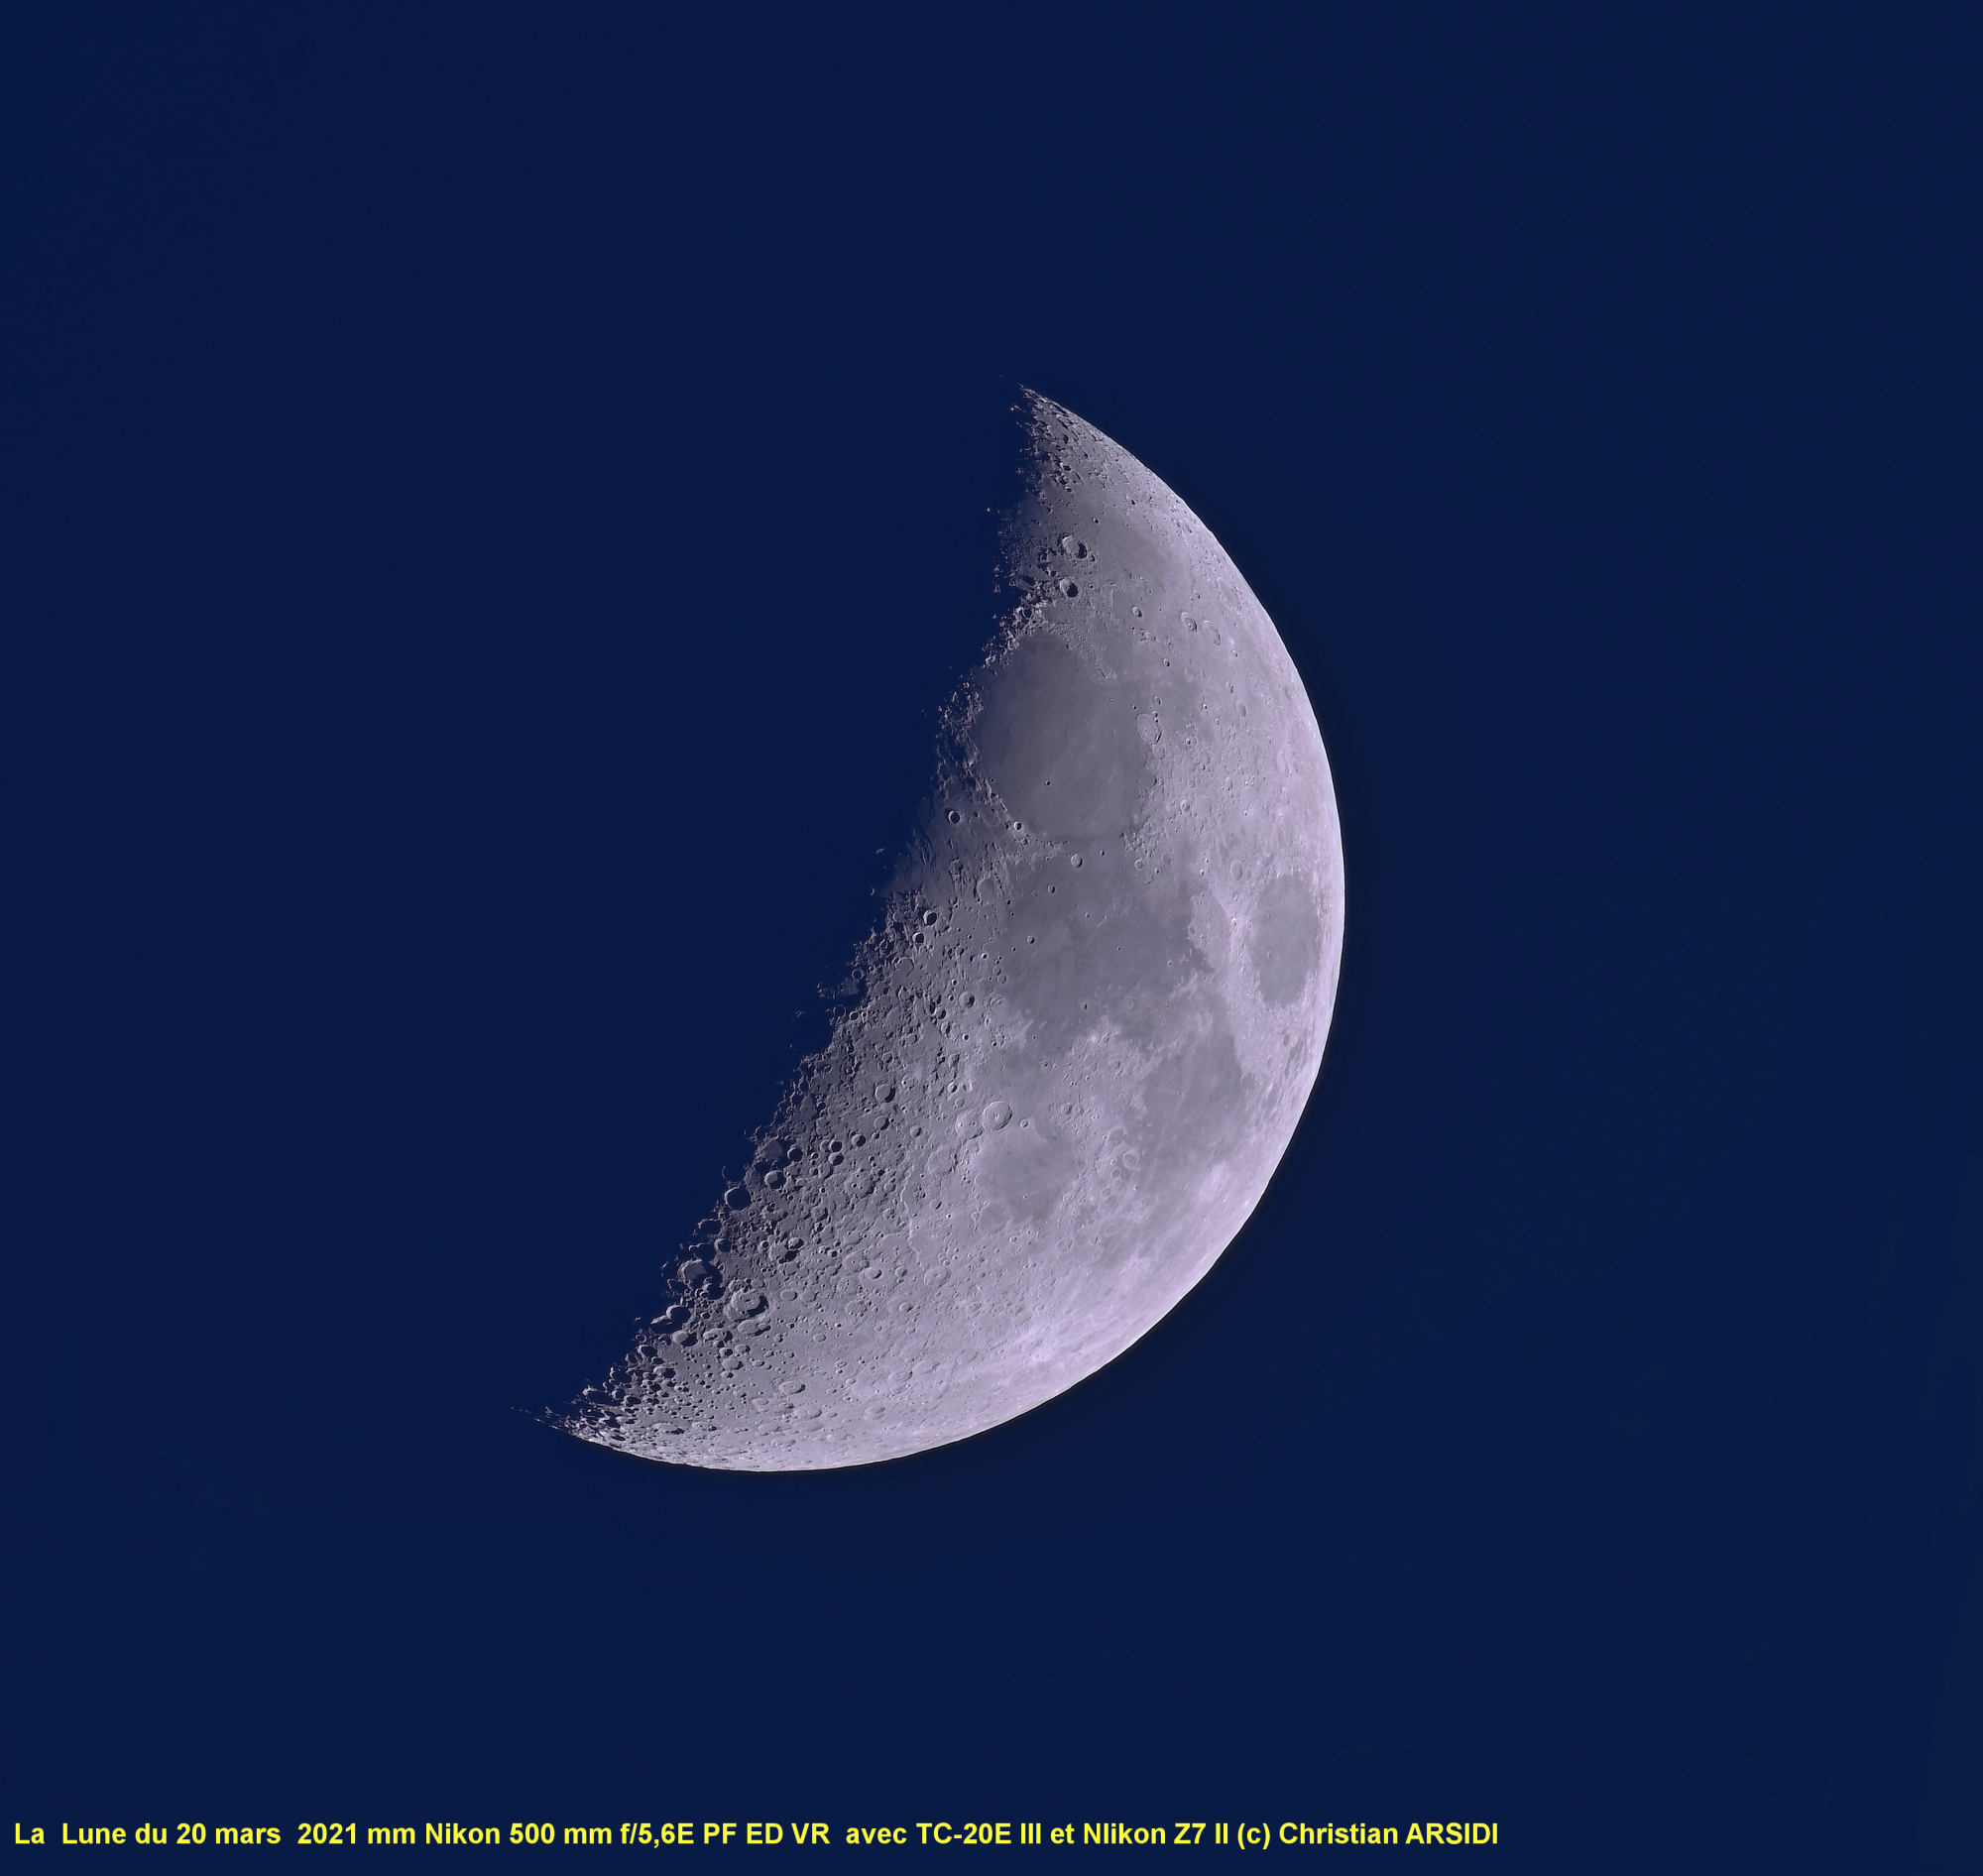 La Lune 20 images V4 TTB_DxO-1 1.jpg